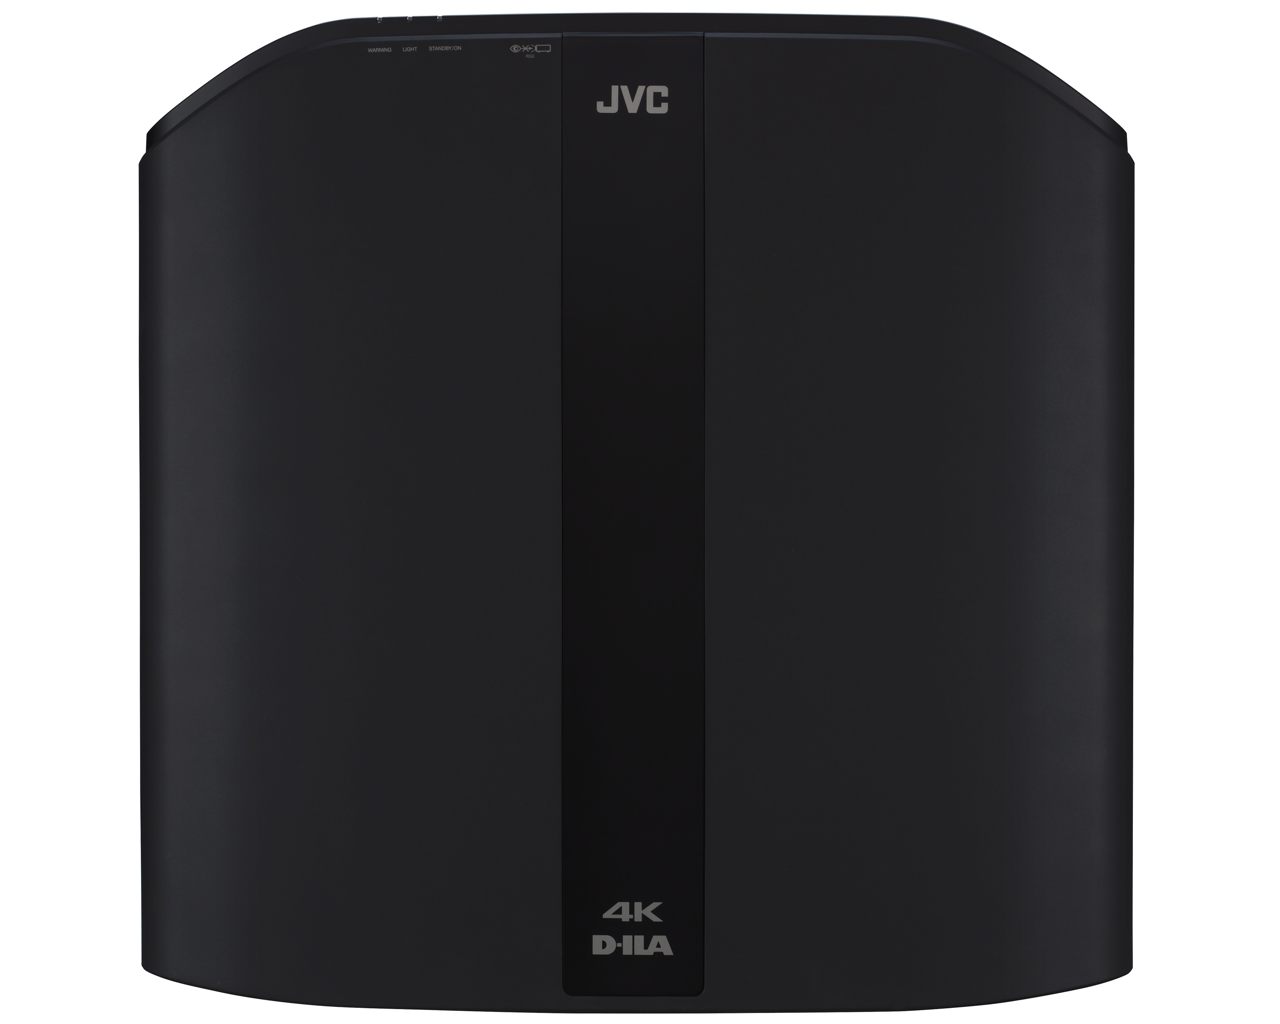 JVC D-ILA-Projektor DLA-NP5